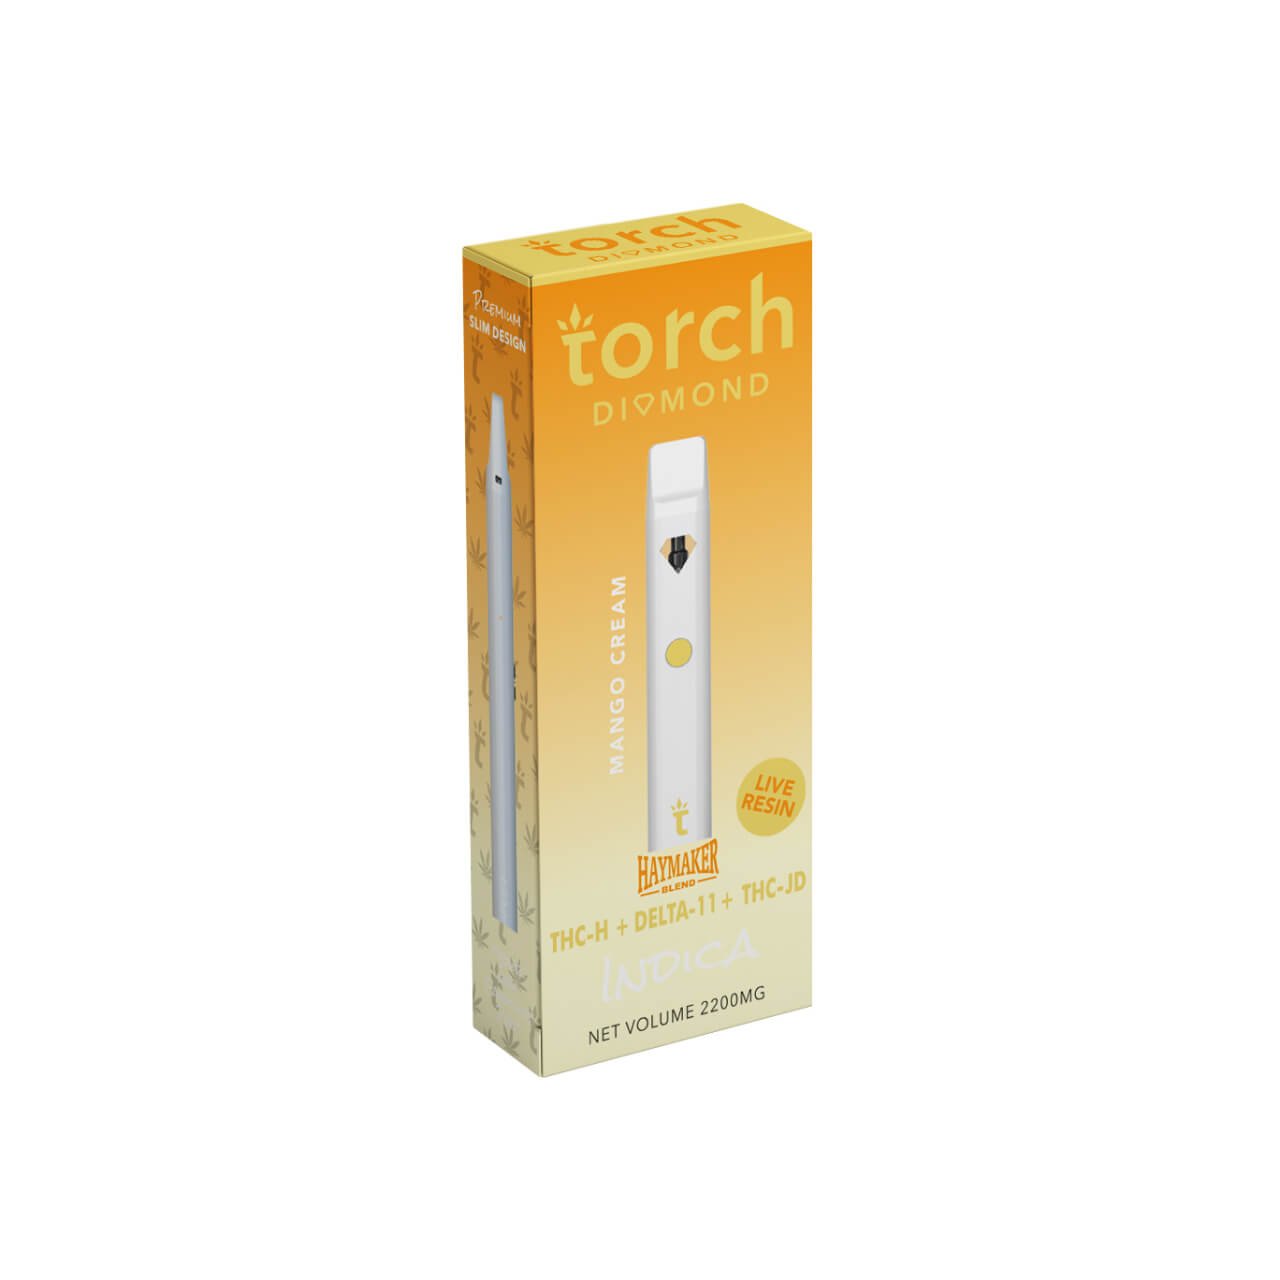 Torch Diamond Mango Cream THC-h + Delta 11 + THC-jd Disposable (2.2g) Best Price